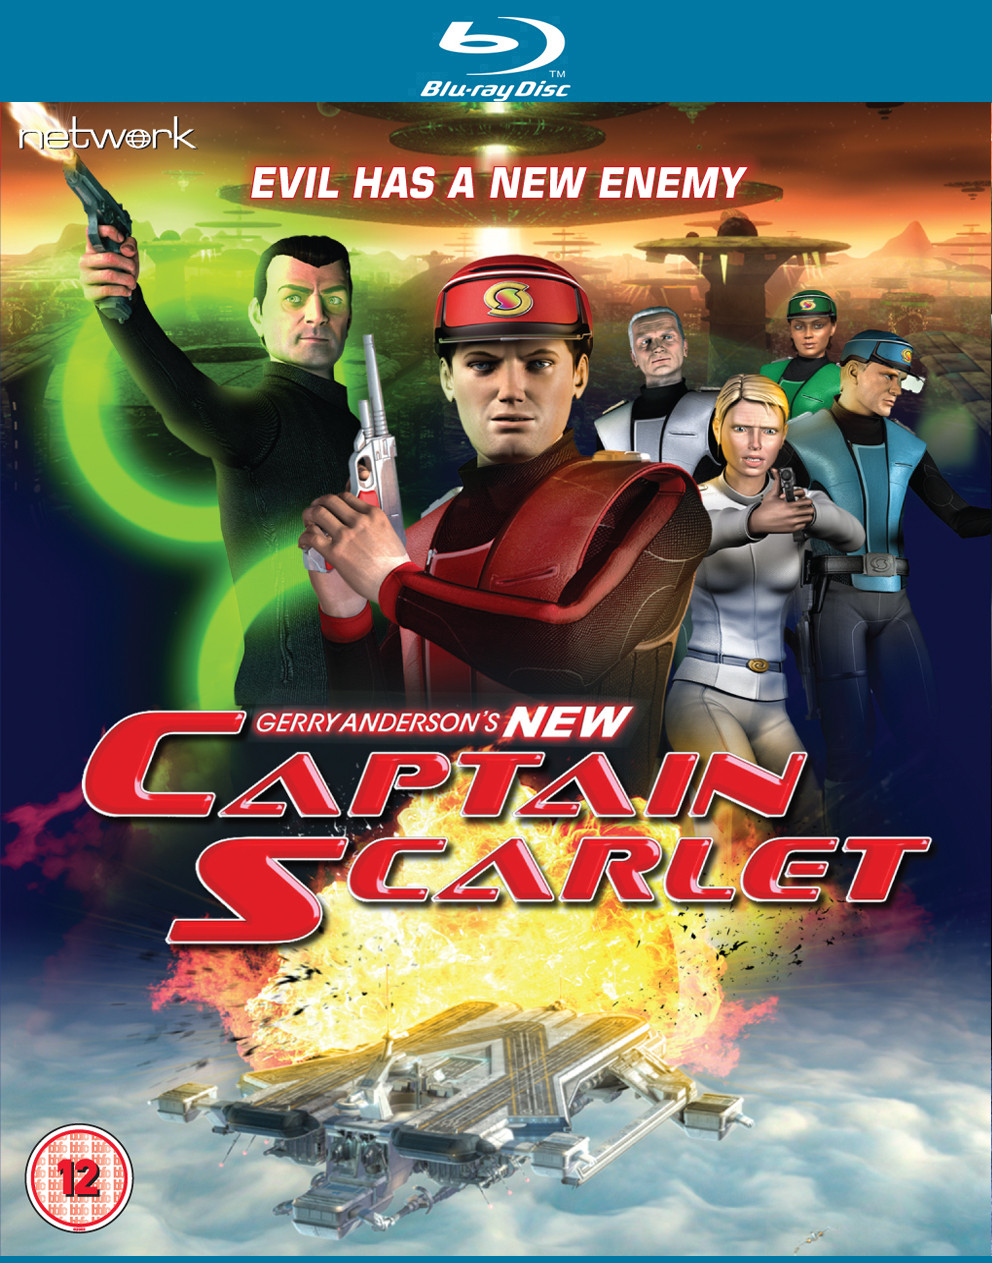 New Captain Scarlet Blu-Ray